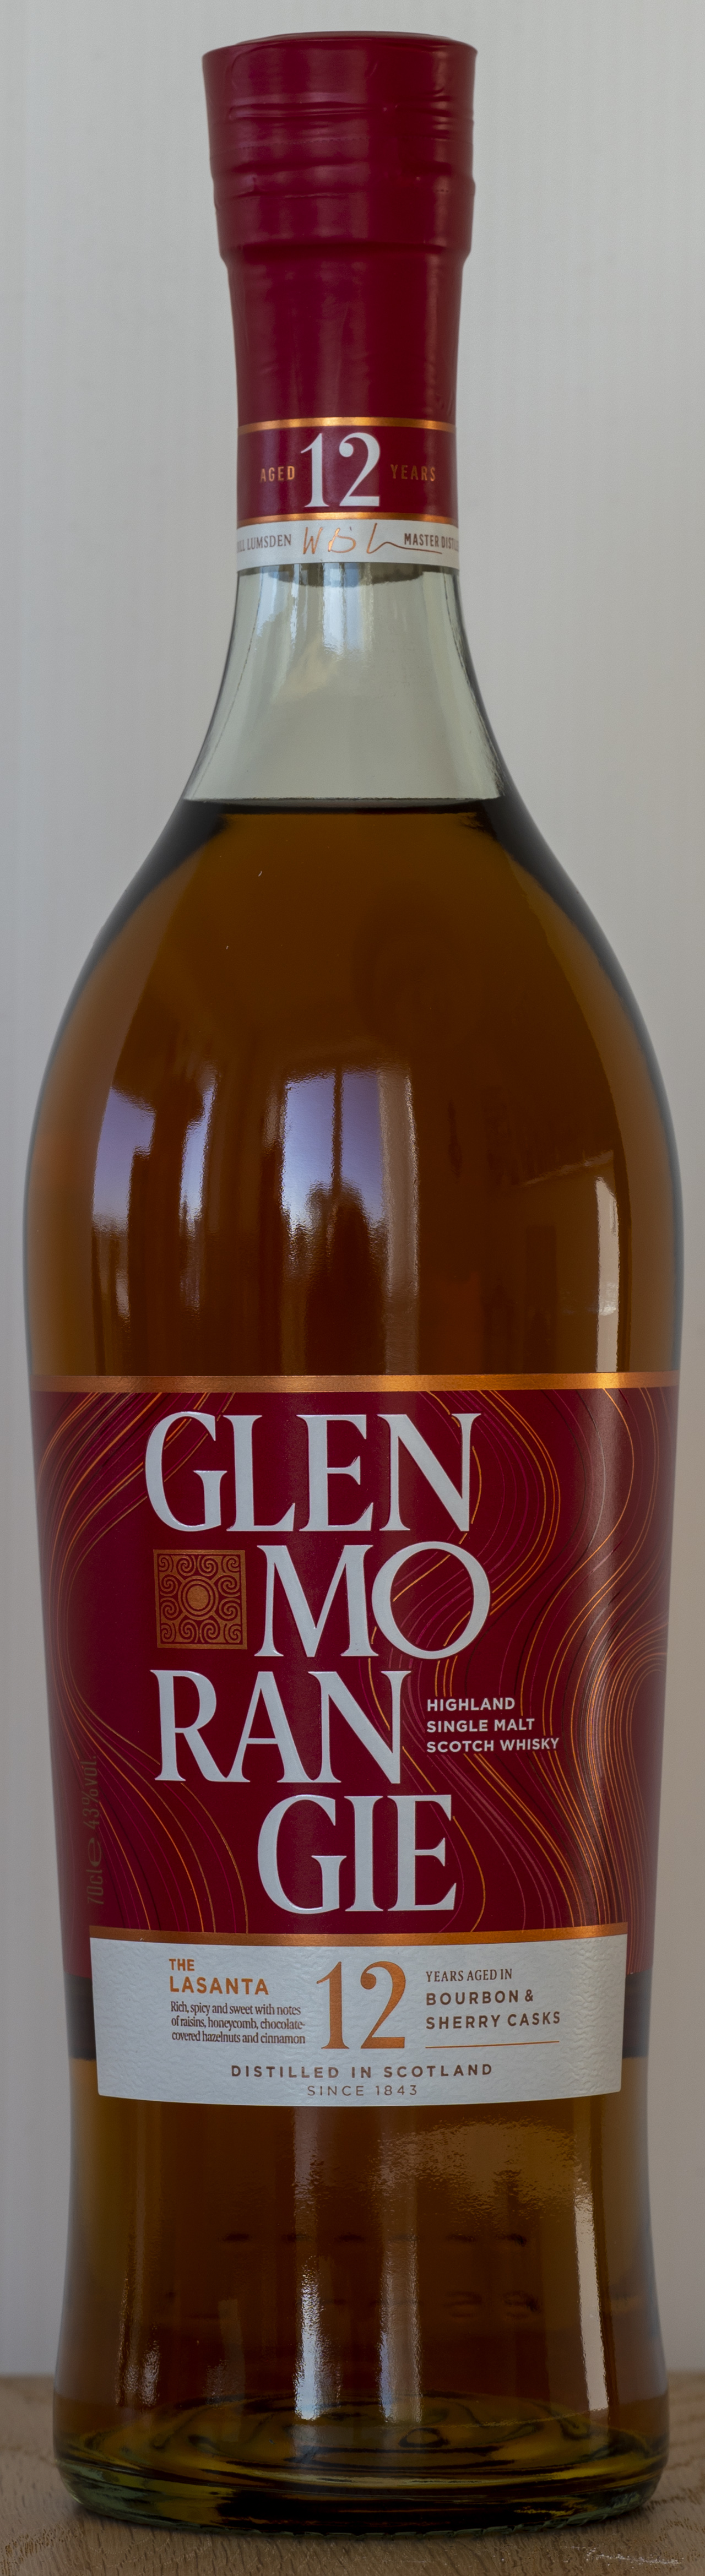 Billede: Z62_6455 - Glenmorangie 12 - bottle front.jpg